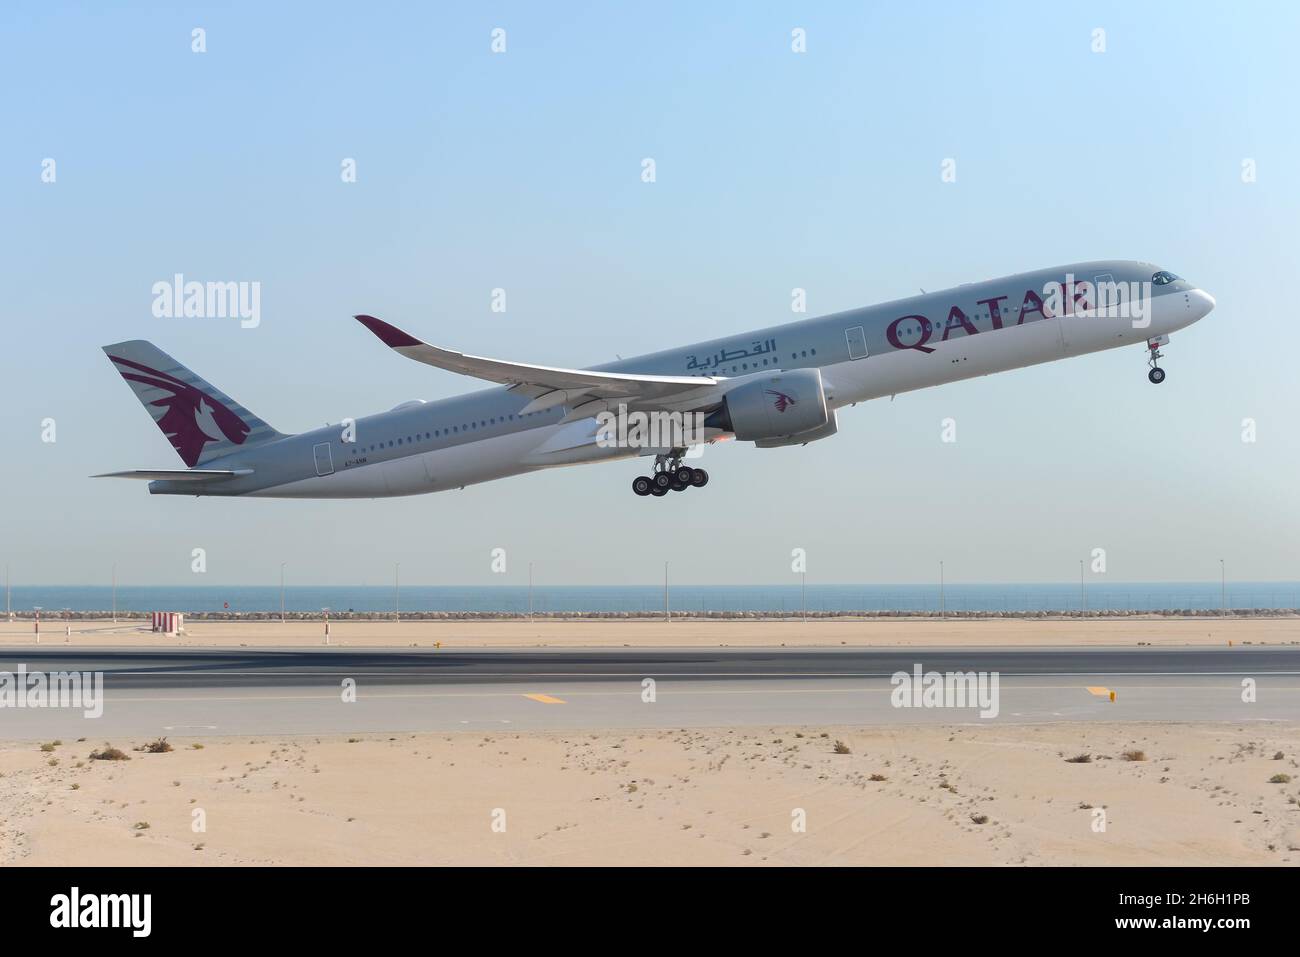 Qatar Airways Airbus A350 airplane taking off from Doha Hamad International Airport in Qatar, the hub of Qatar Airways. Aircraft take off. Stock Photo